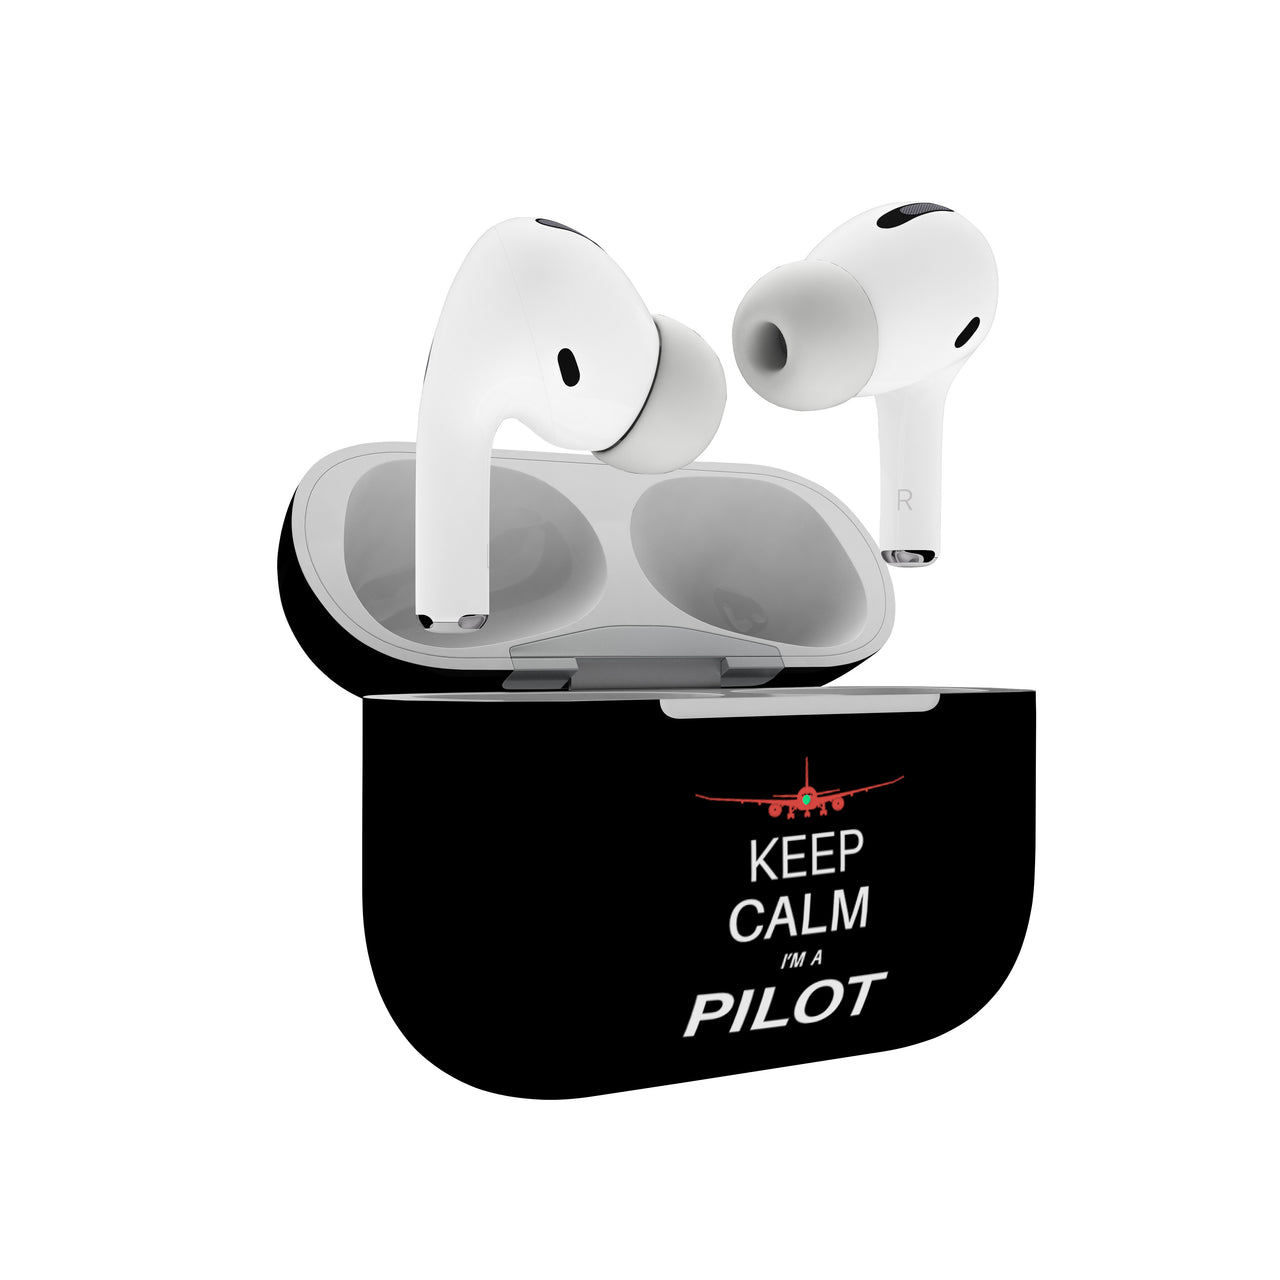 Pilot (777 Silhouette) Designed AirPods  Cases